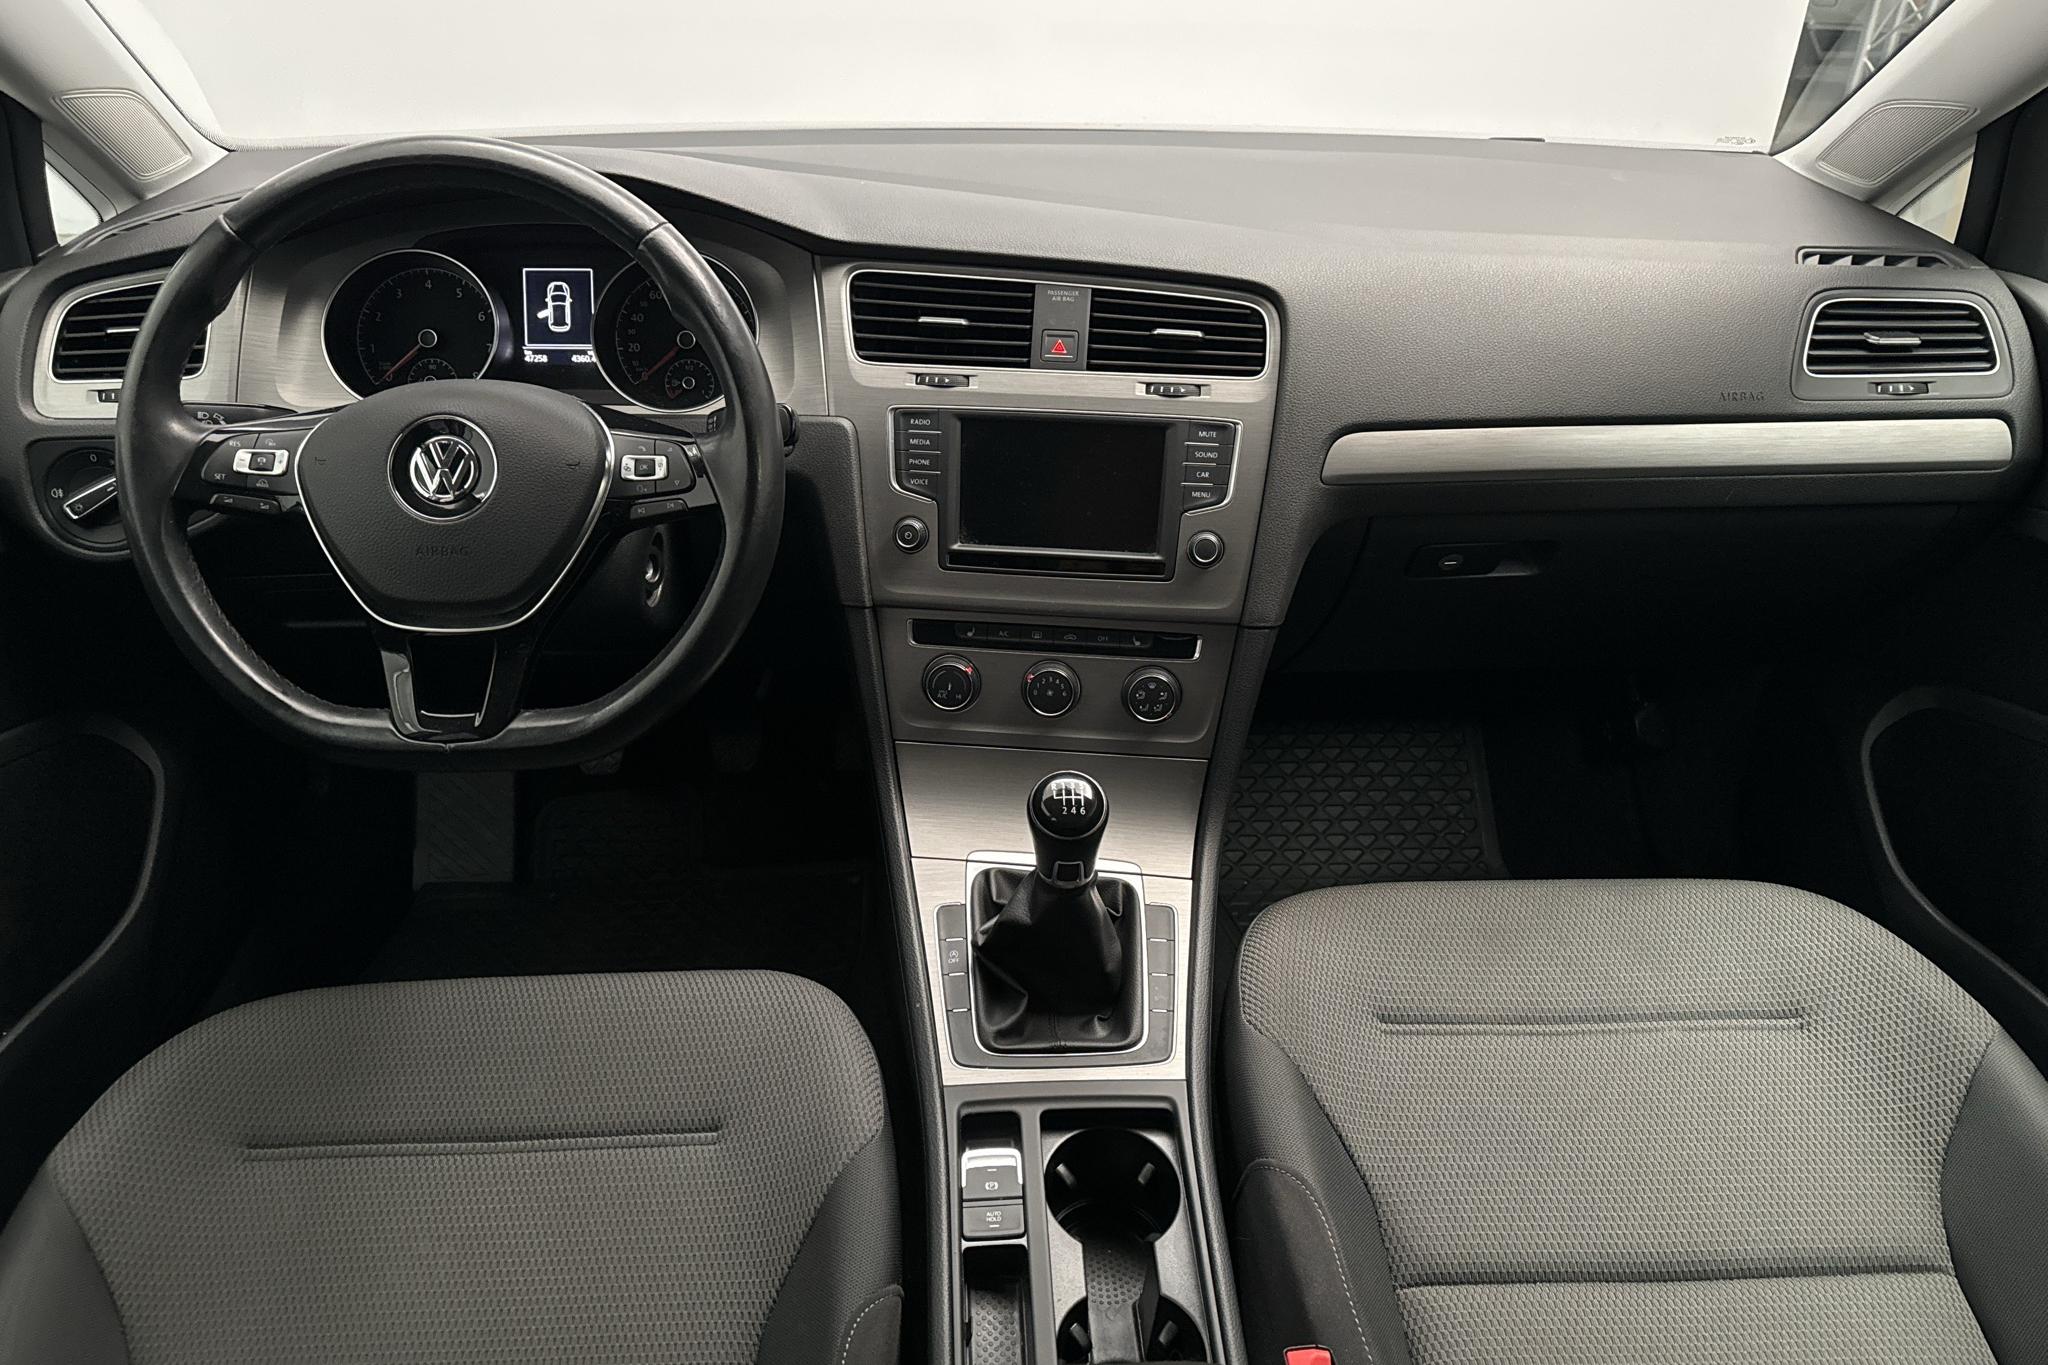 VW Golf VII 1.2 TSI 5dr (110hk) - 47 250 km - Manualna - szary - 2016